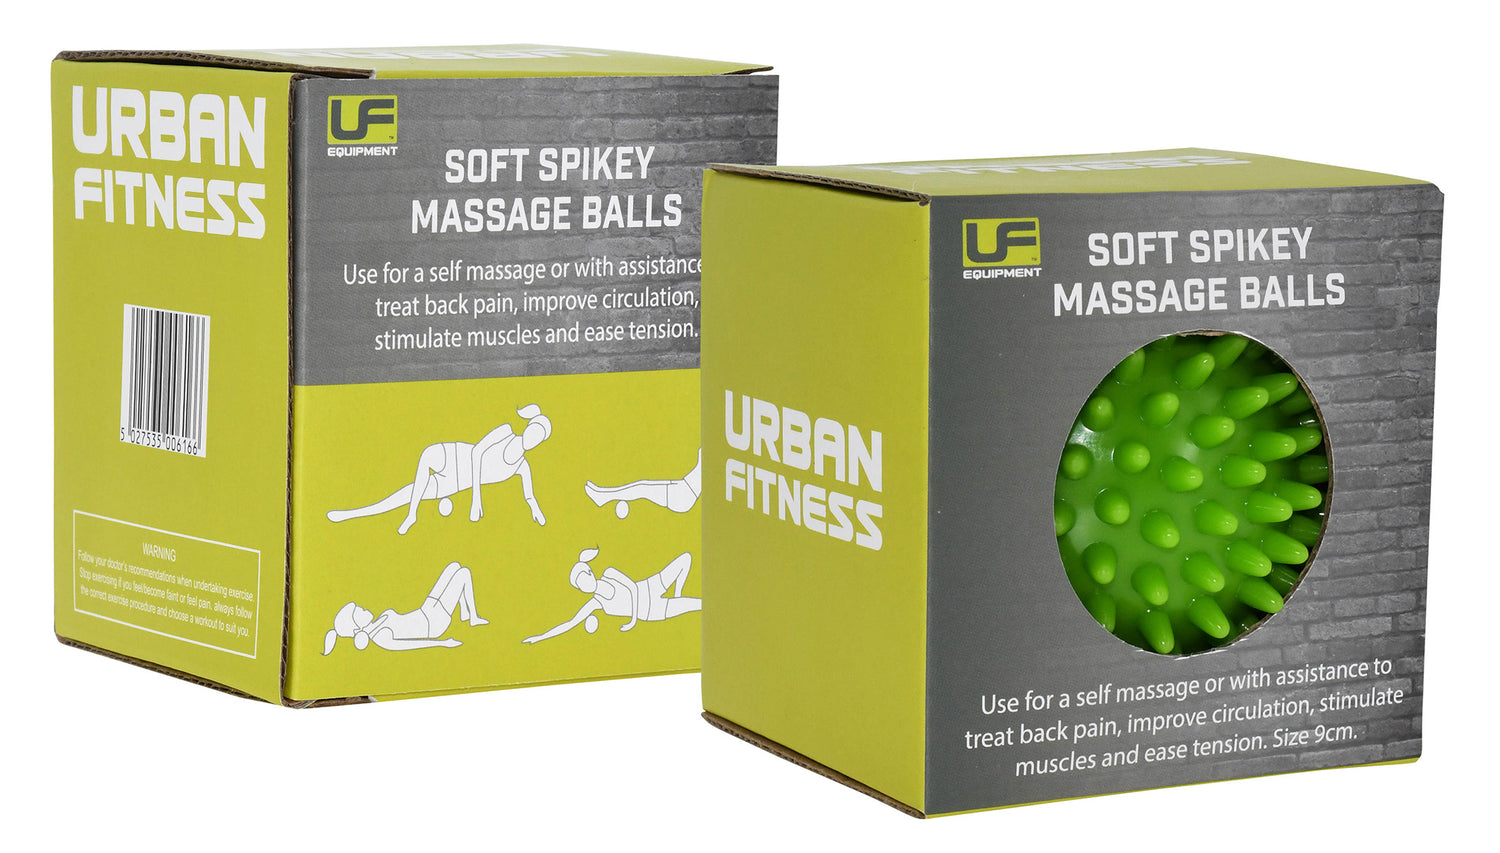 Urban Fitness Soft Spikey Massage Balls